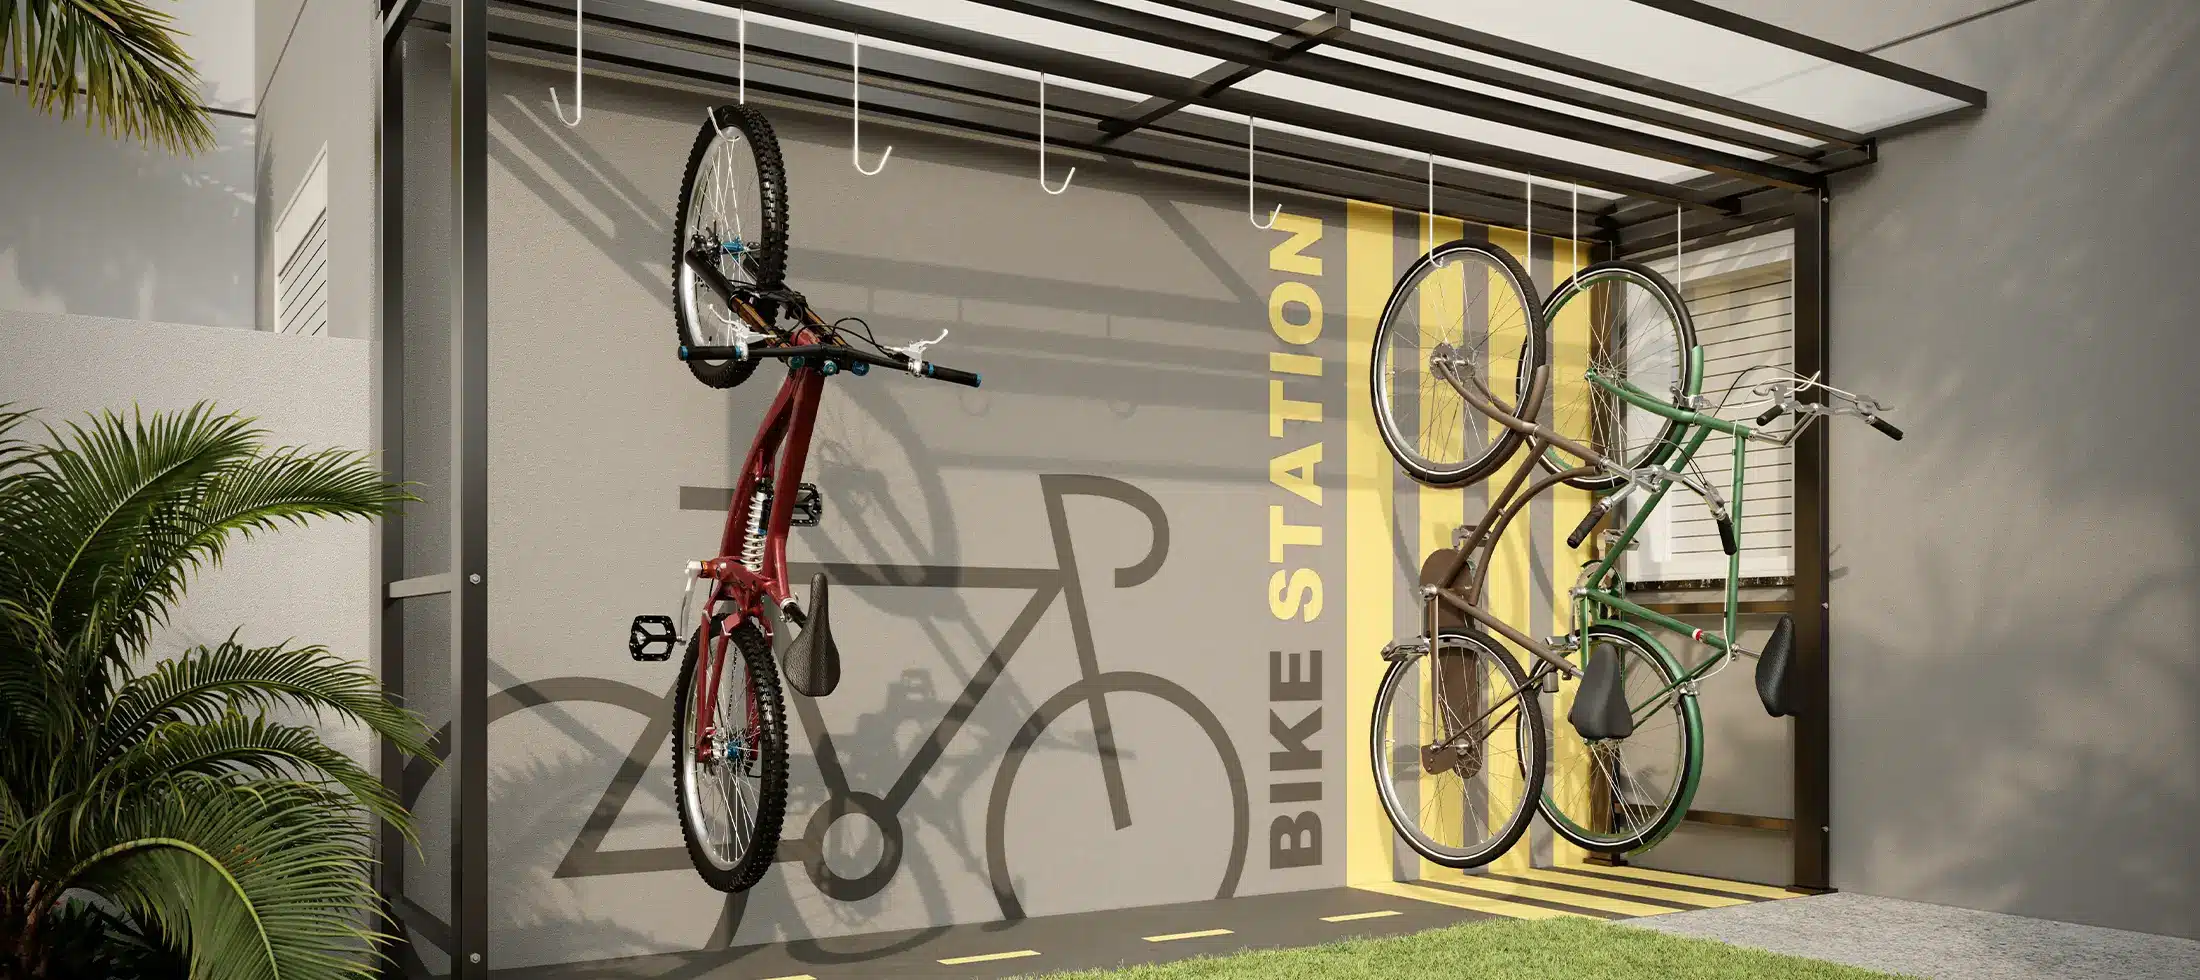 arbore engenharia urban corifeu bicicletario